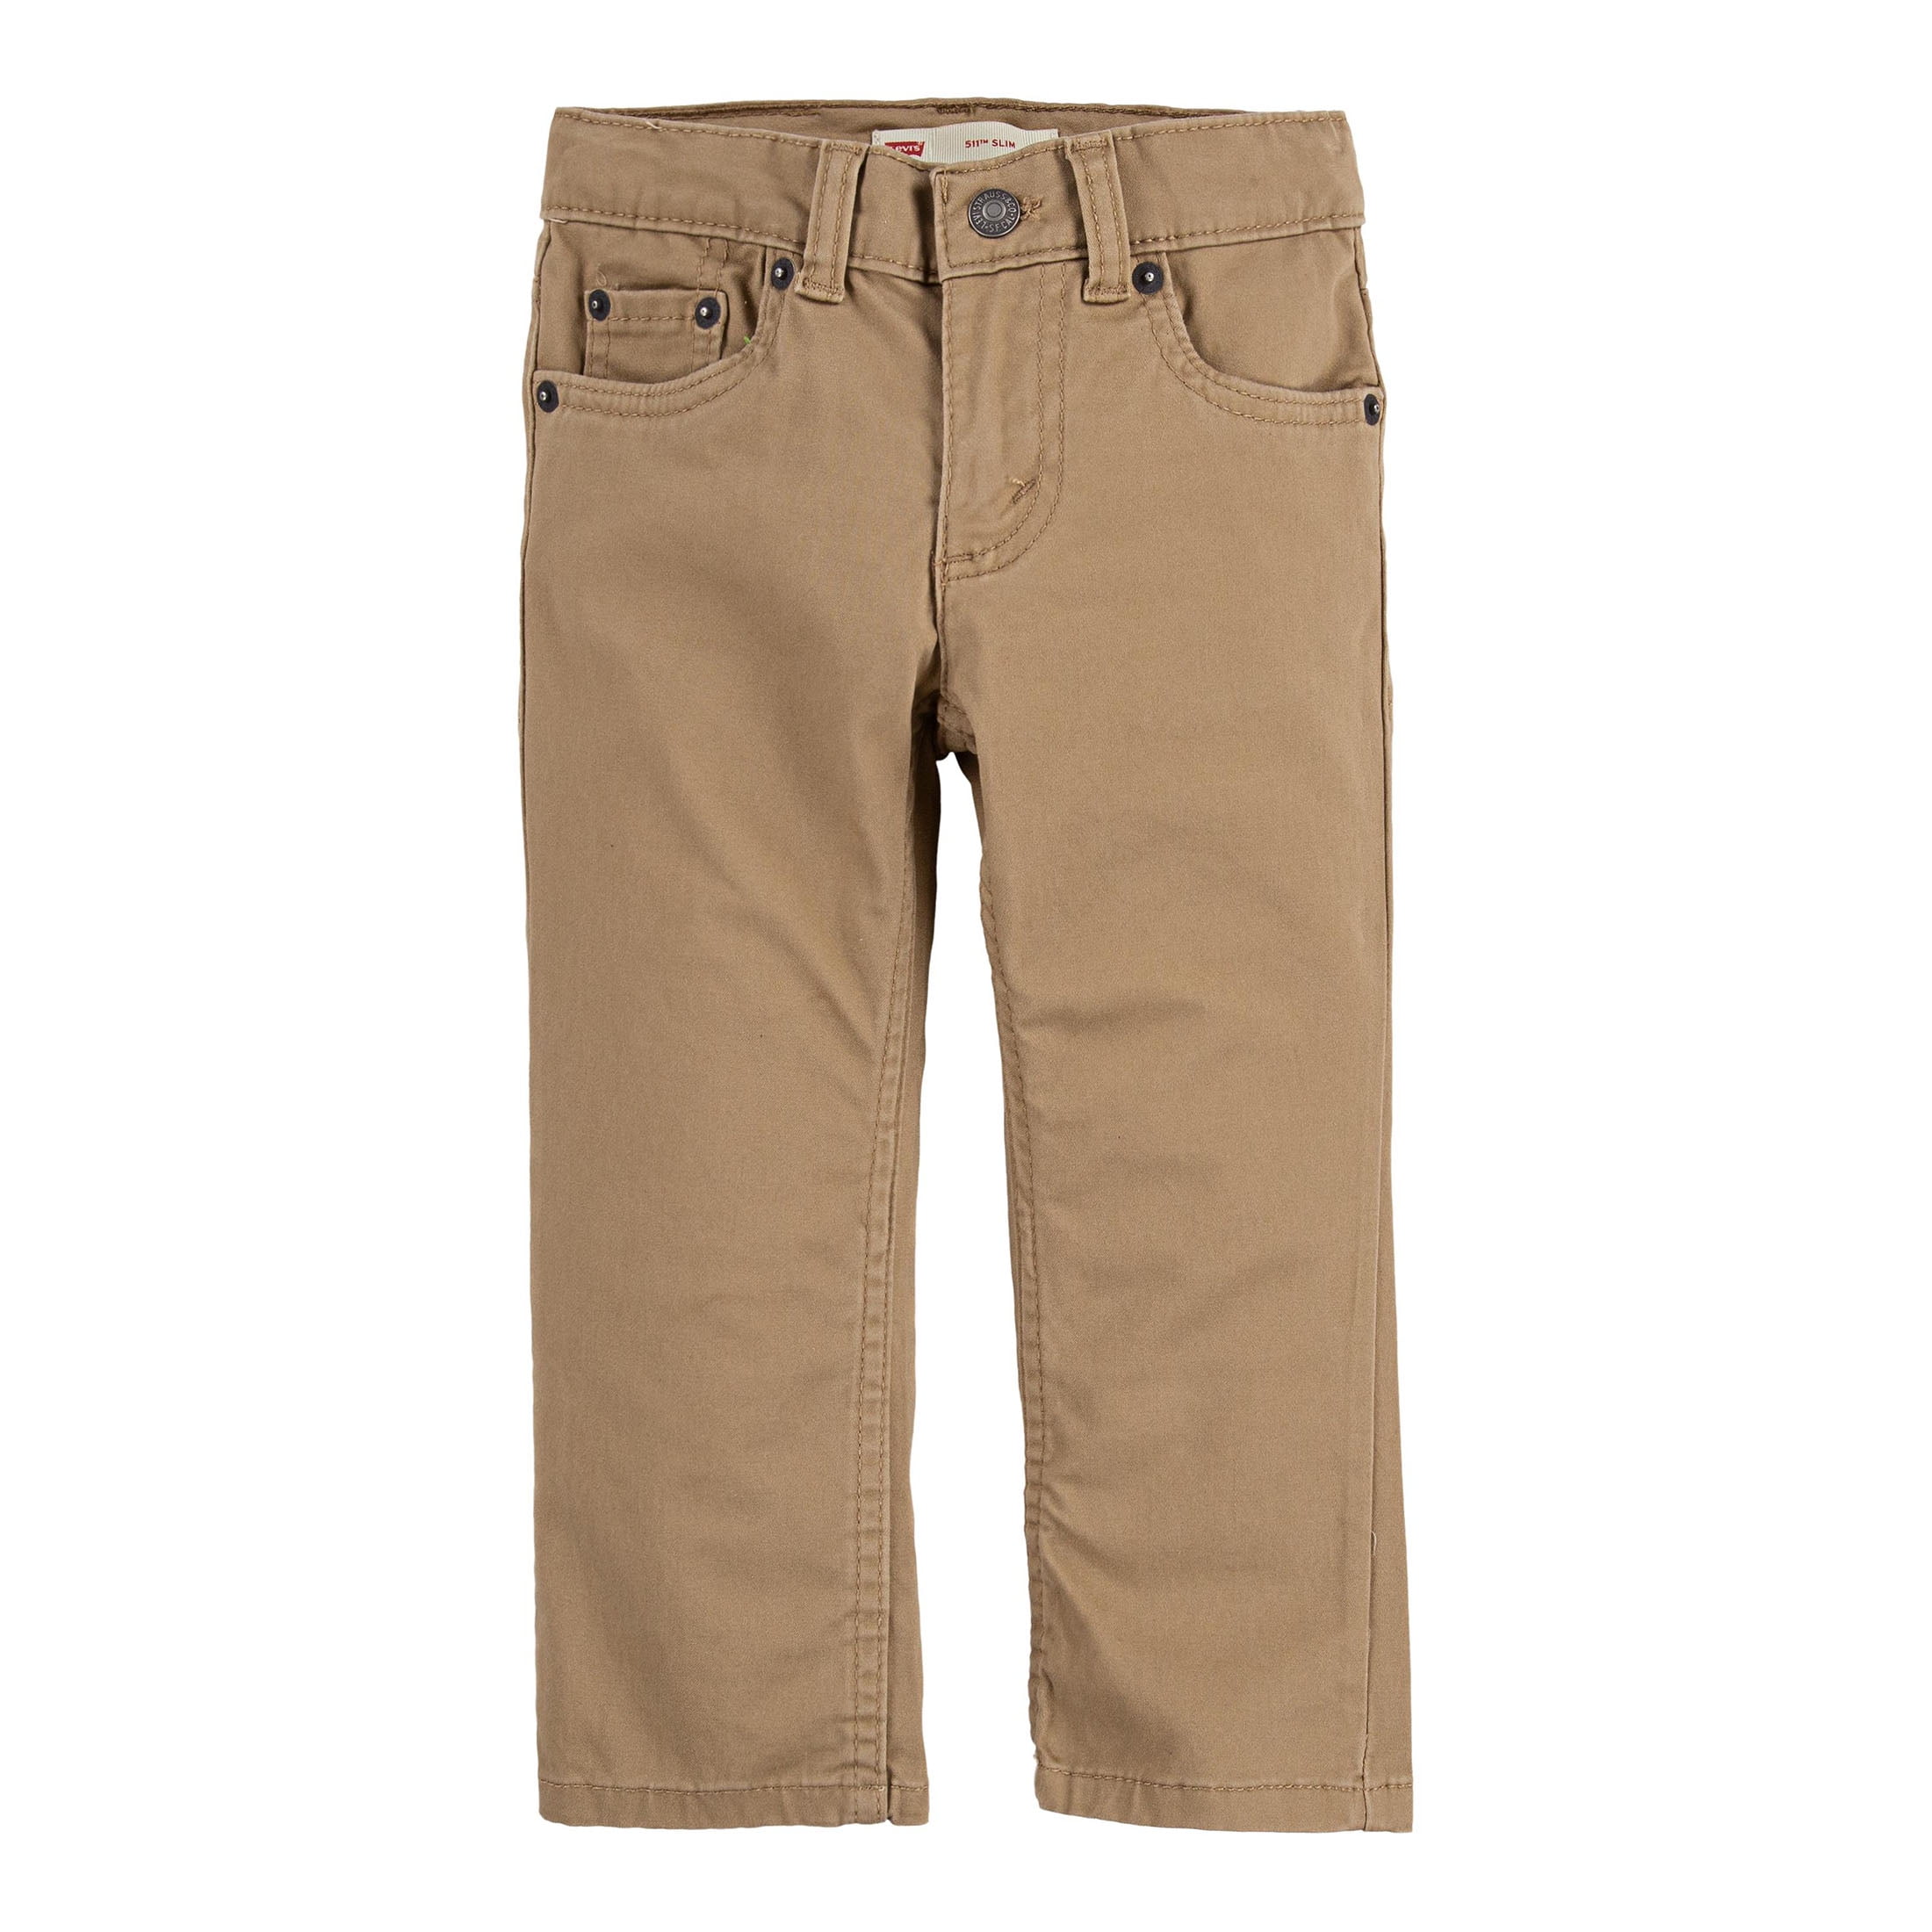 Levi's Toddler Boys' 511 Slim Fit Soft Brushed Pants, Sizes 2T-4T